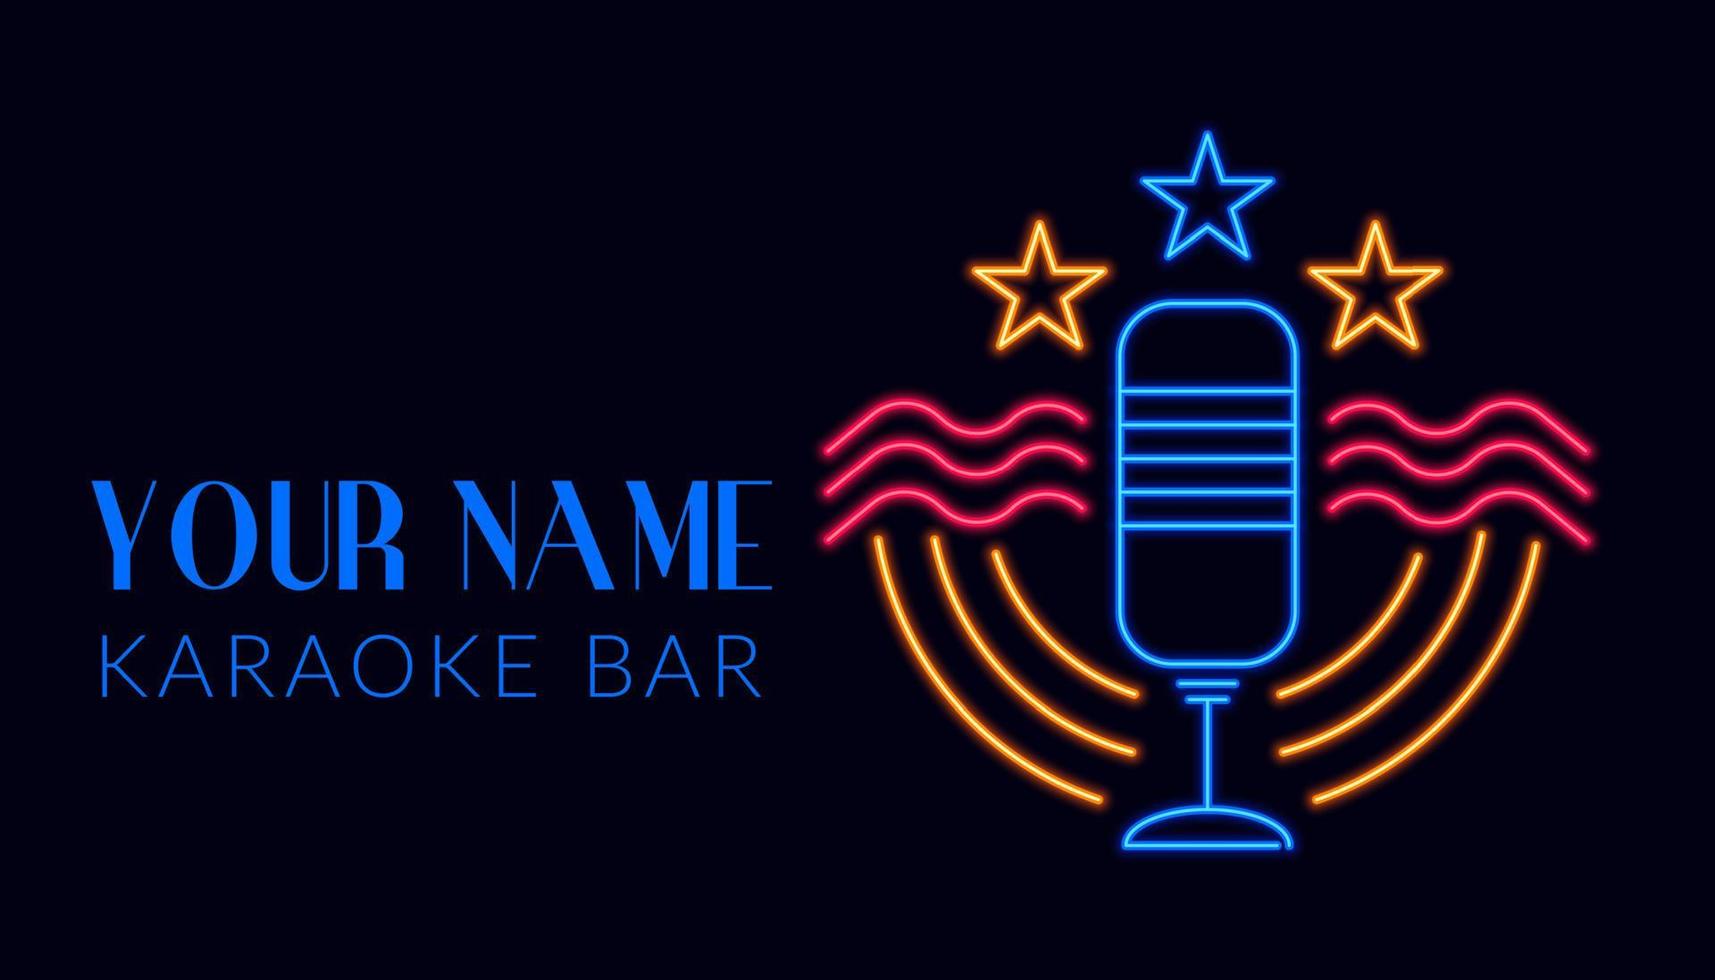 Karaoke-Bar-Werbebanner oder Einladungskarte vektor